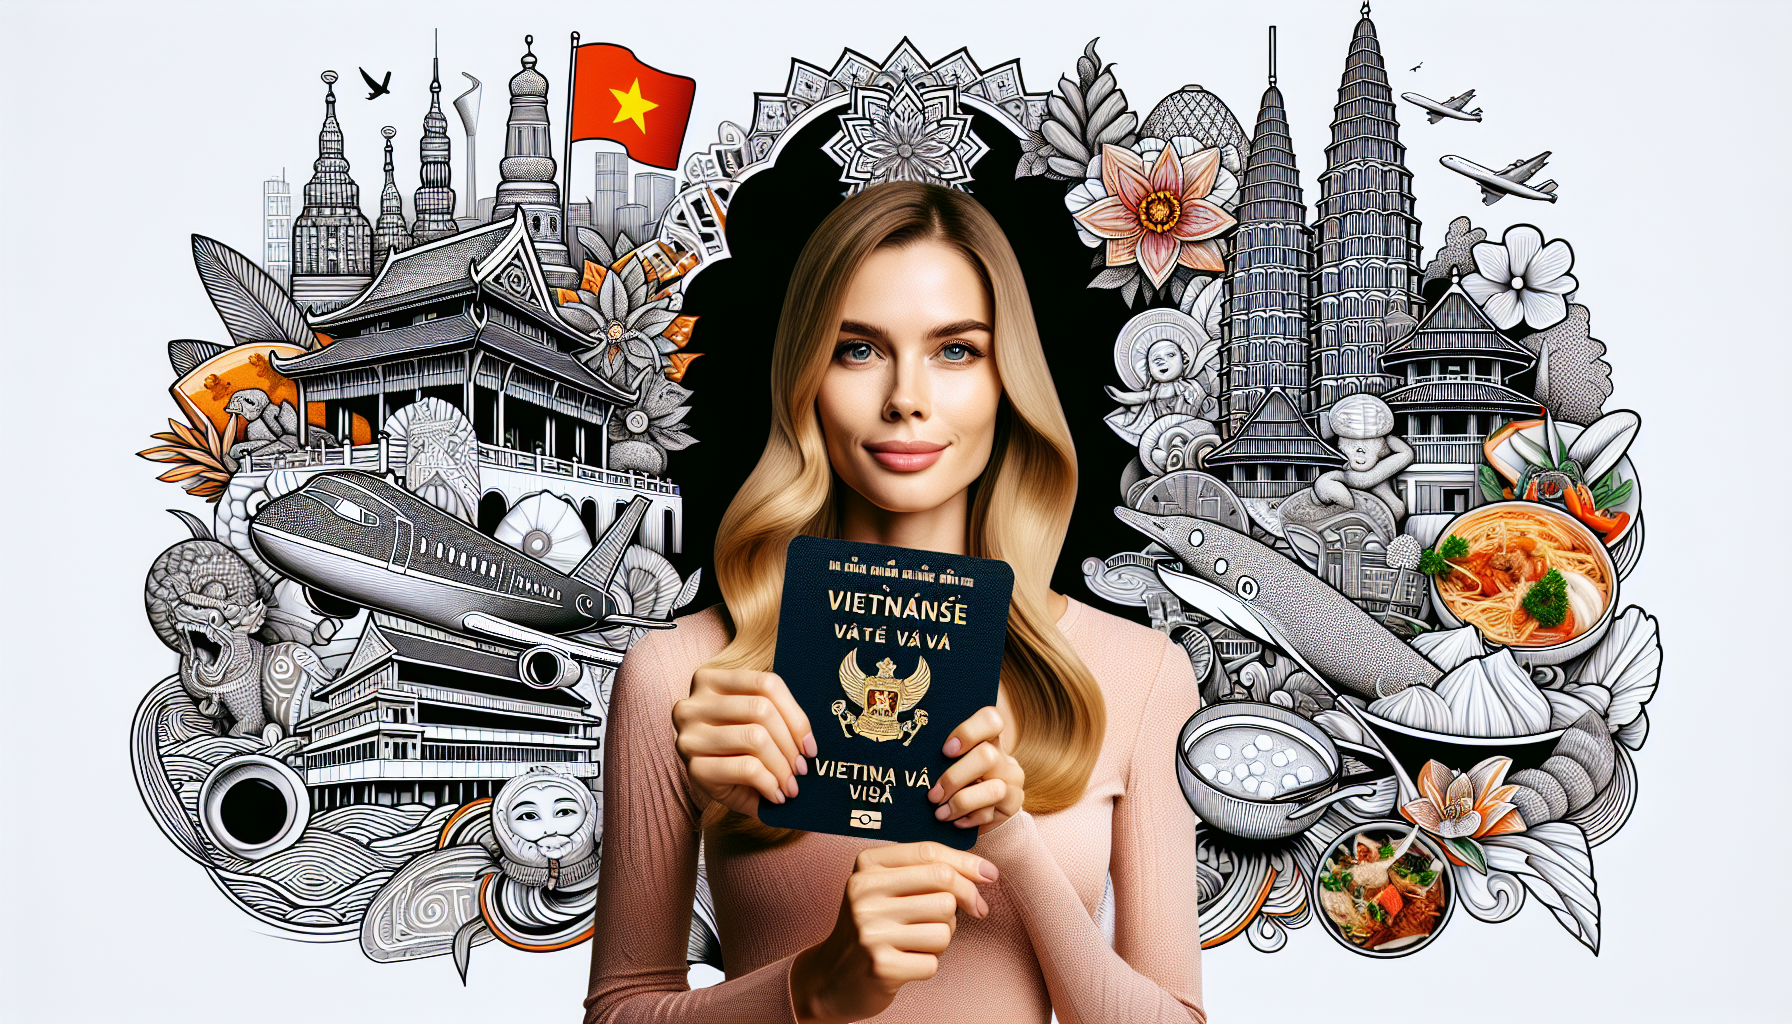 Do Austrian Citizens Require Vietnamese Sponsorship for Business Visas? How to Apply?